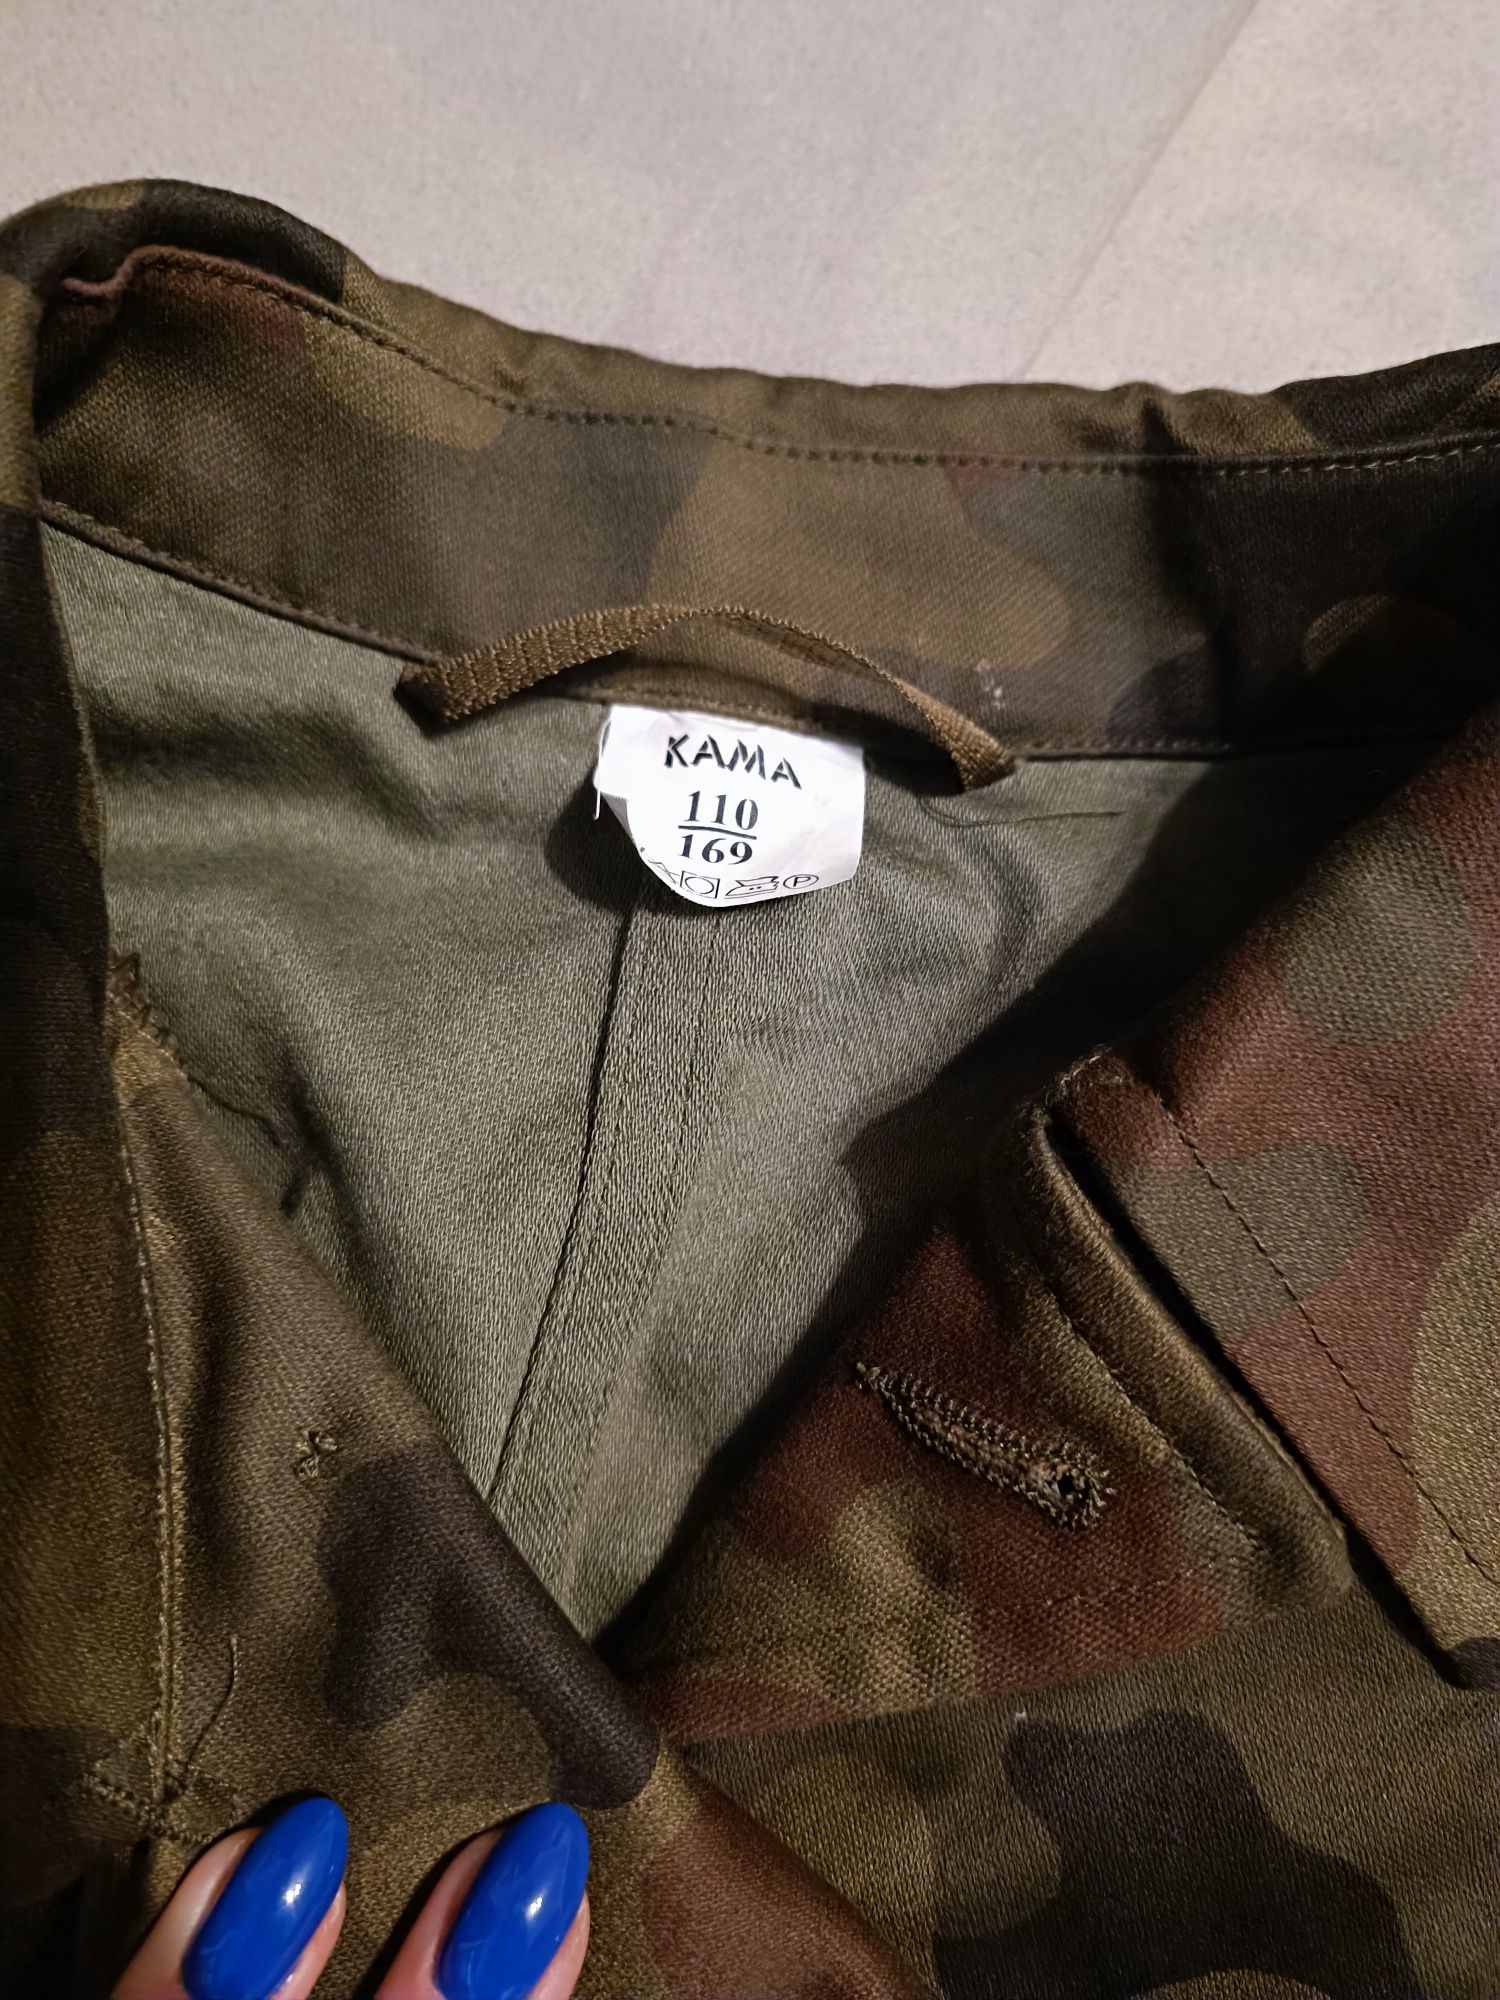 Nowa bluza wojskowa Kama 110 169